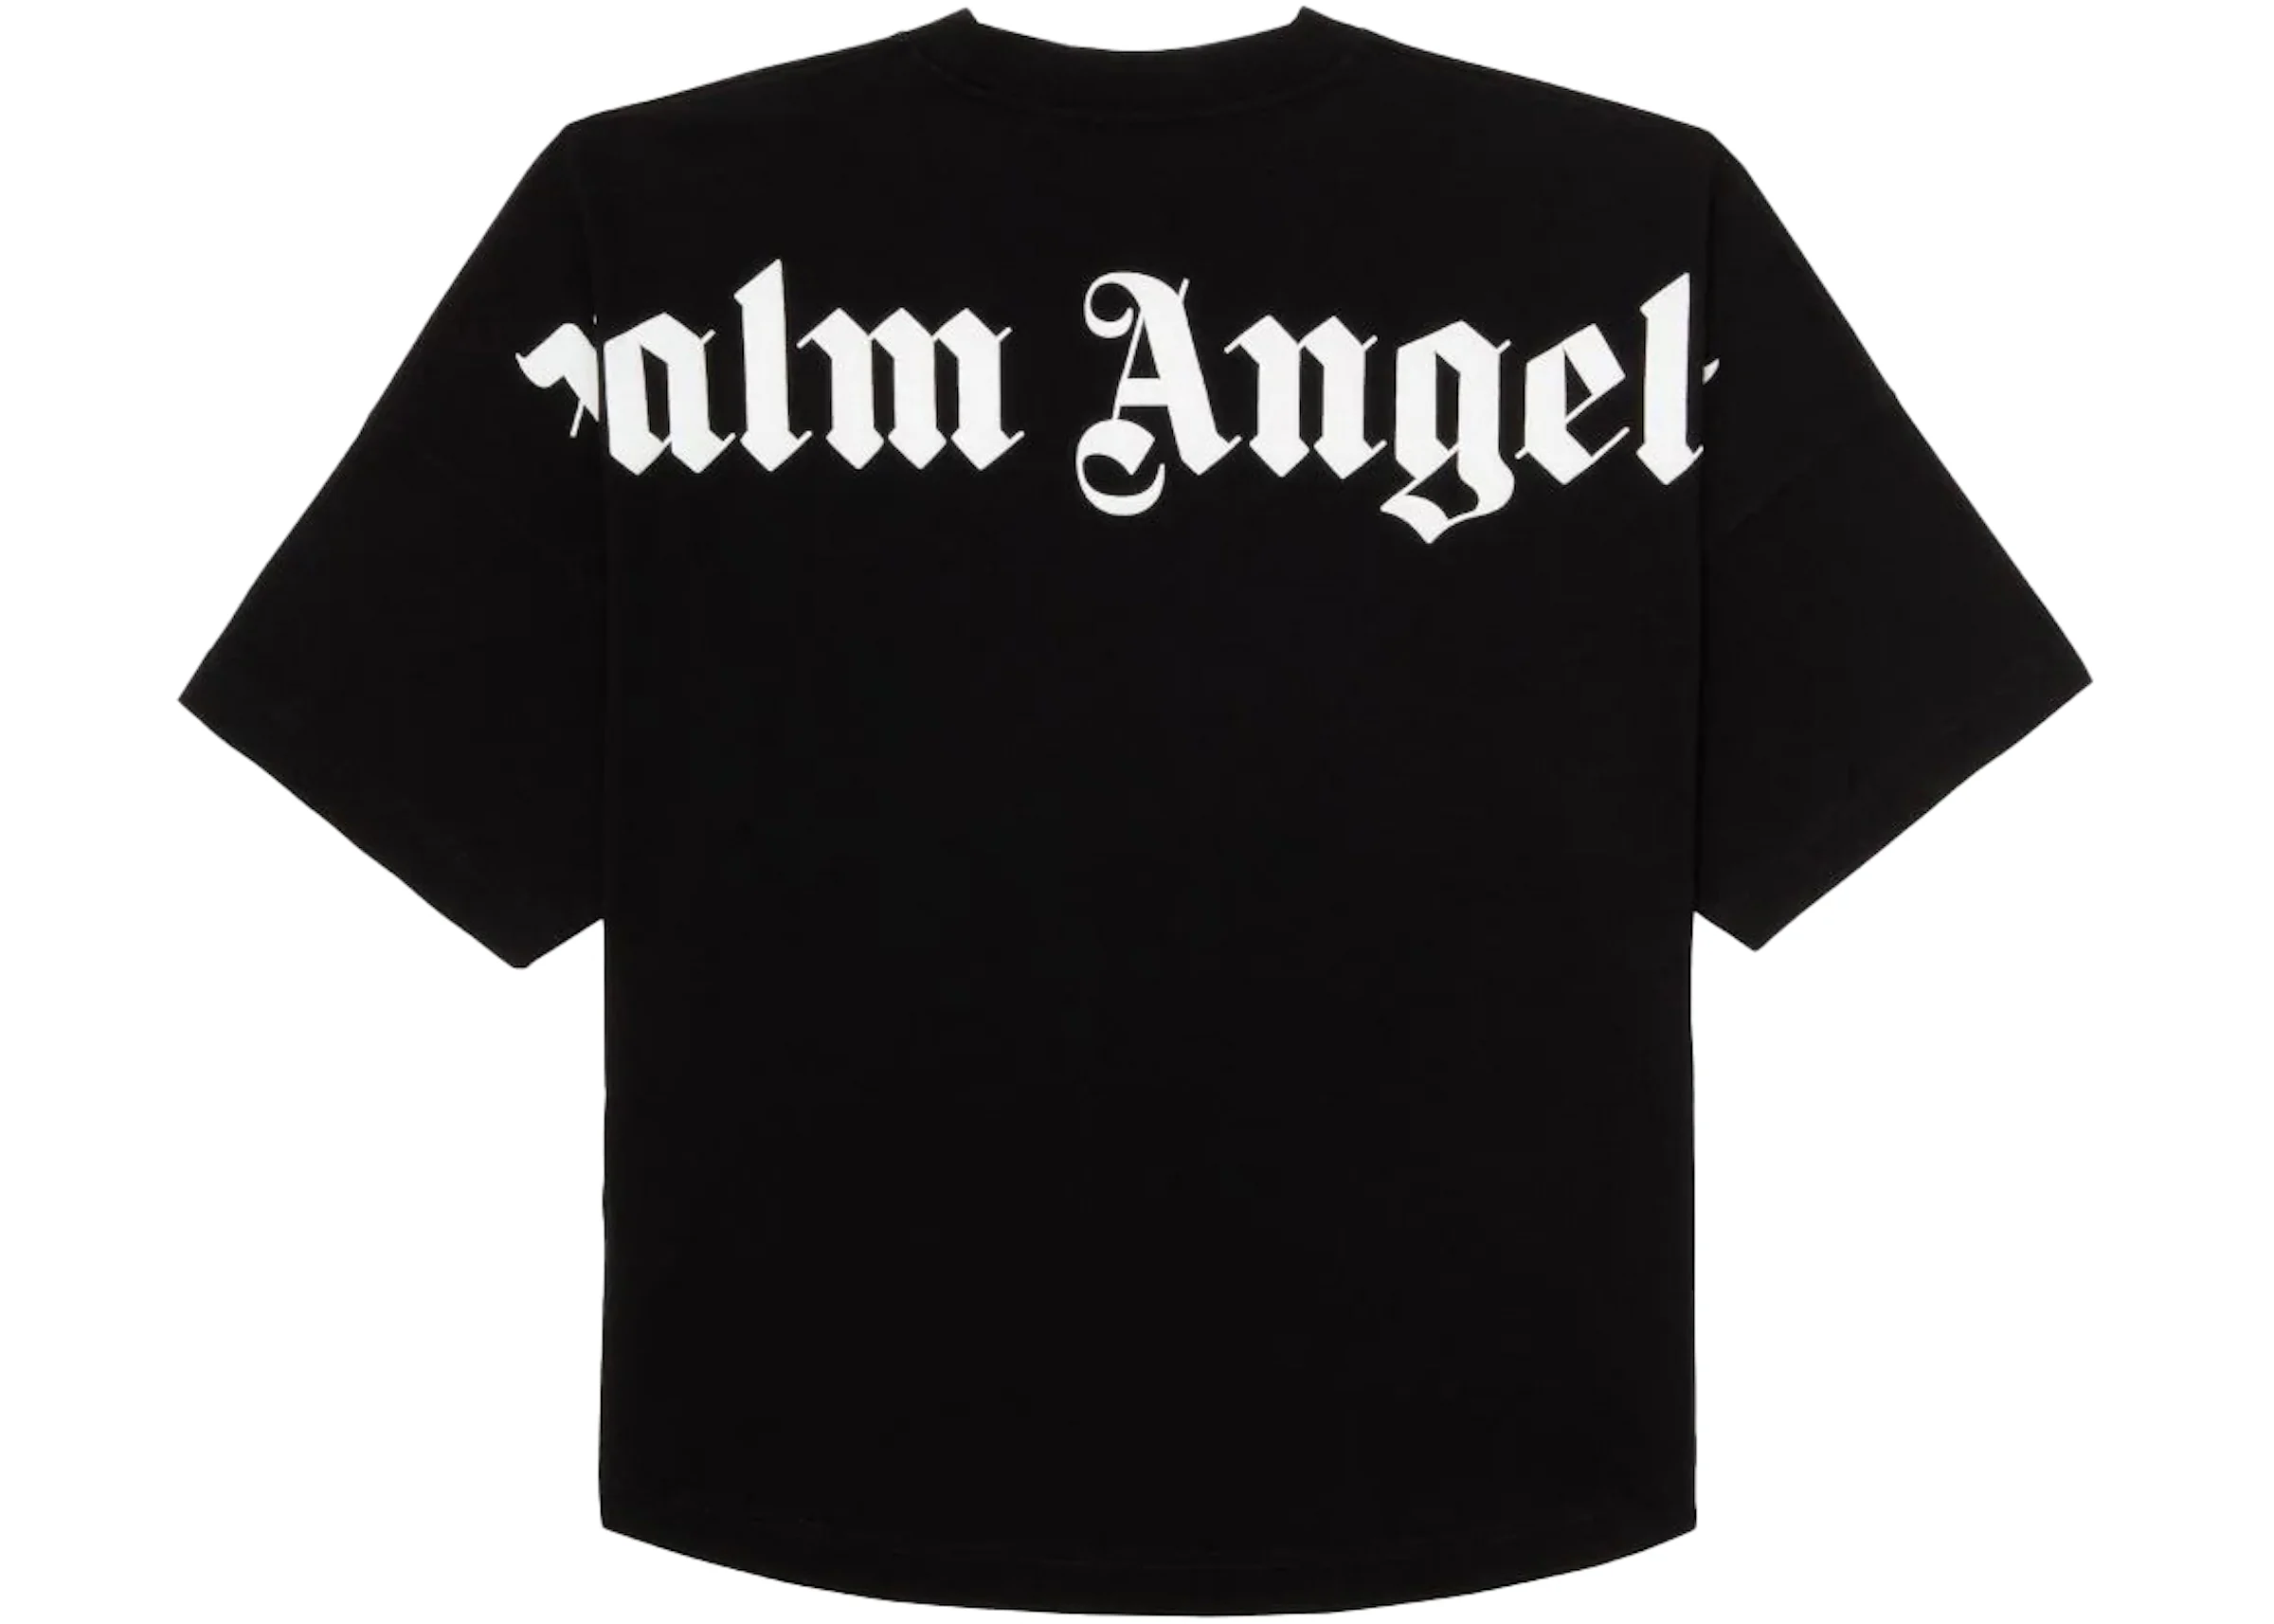 Palm Angels Logo T-shirt Black